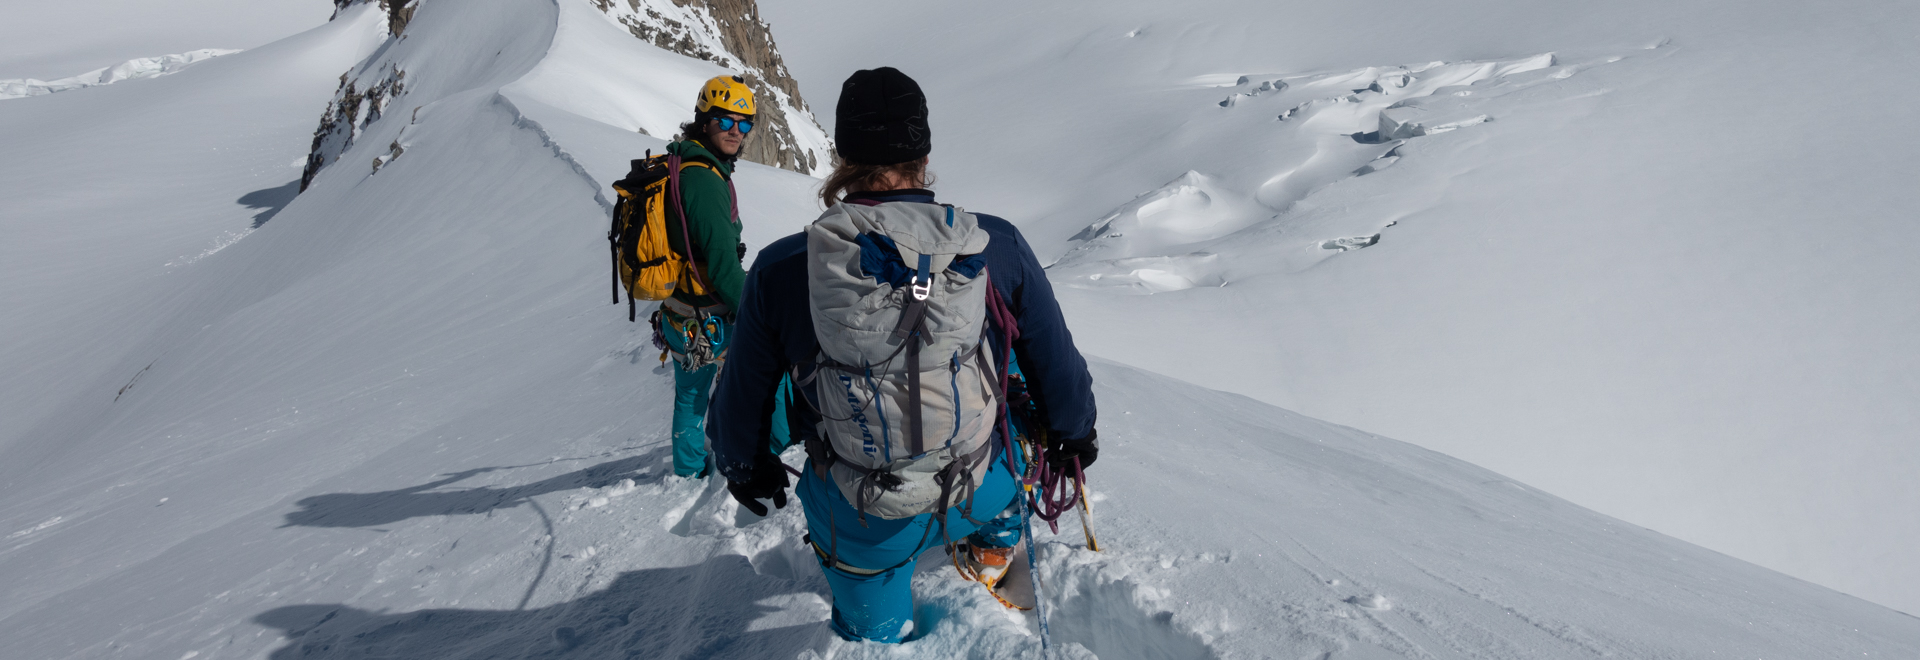 Training sul ghiacciaio del Monte Bianco